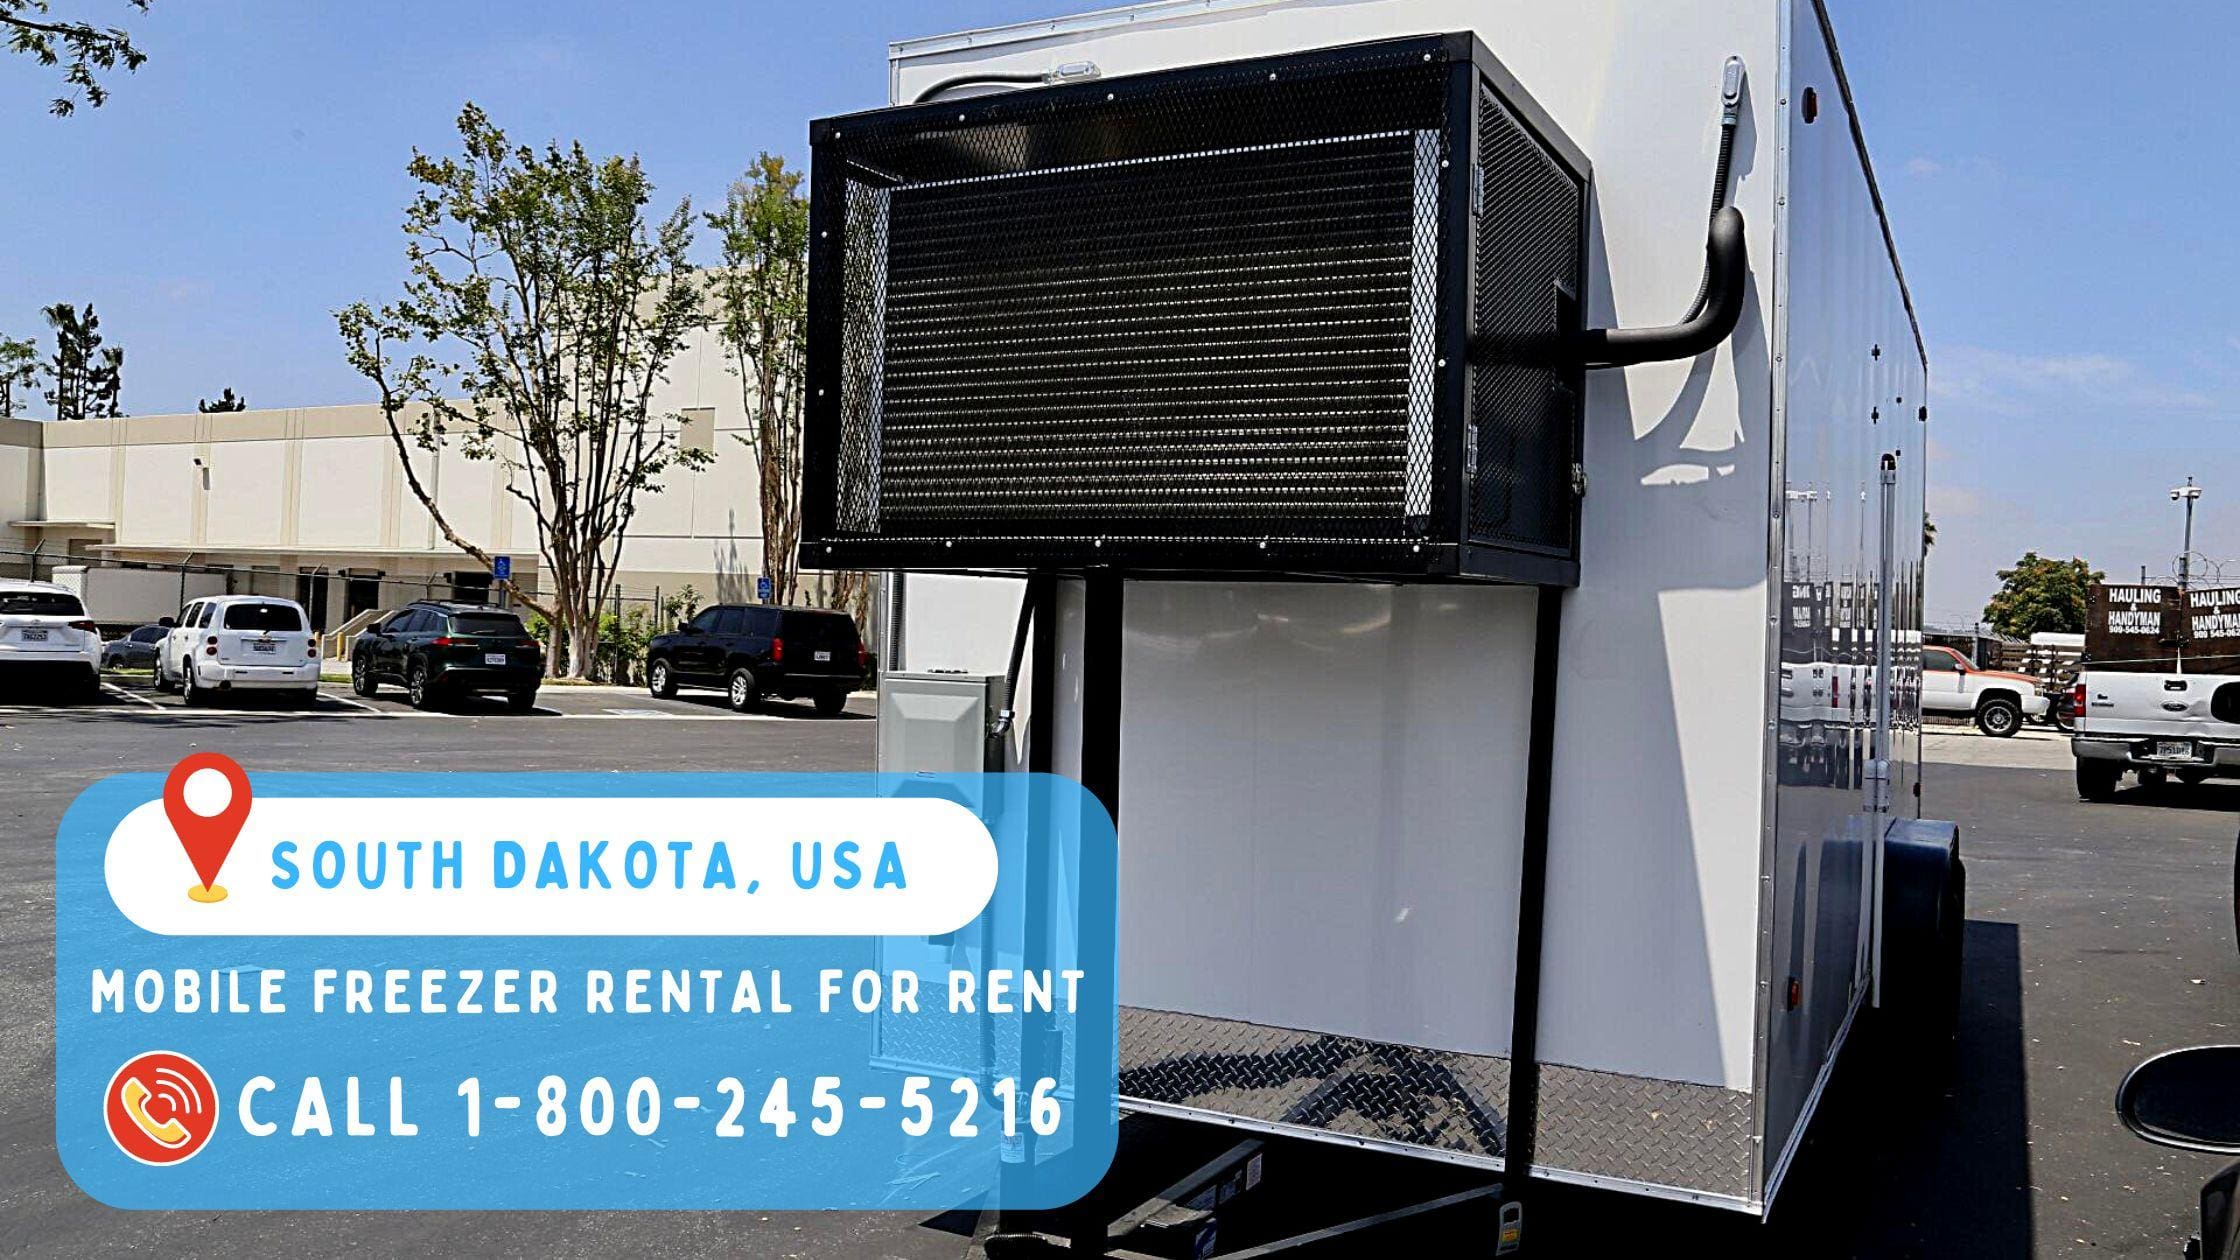 Mobile freezer rental for rent in South Dakota